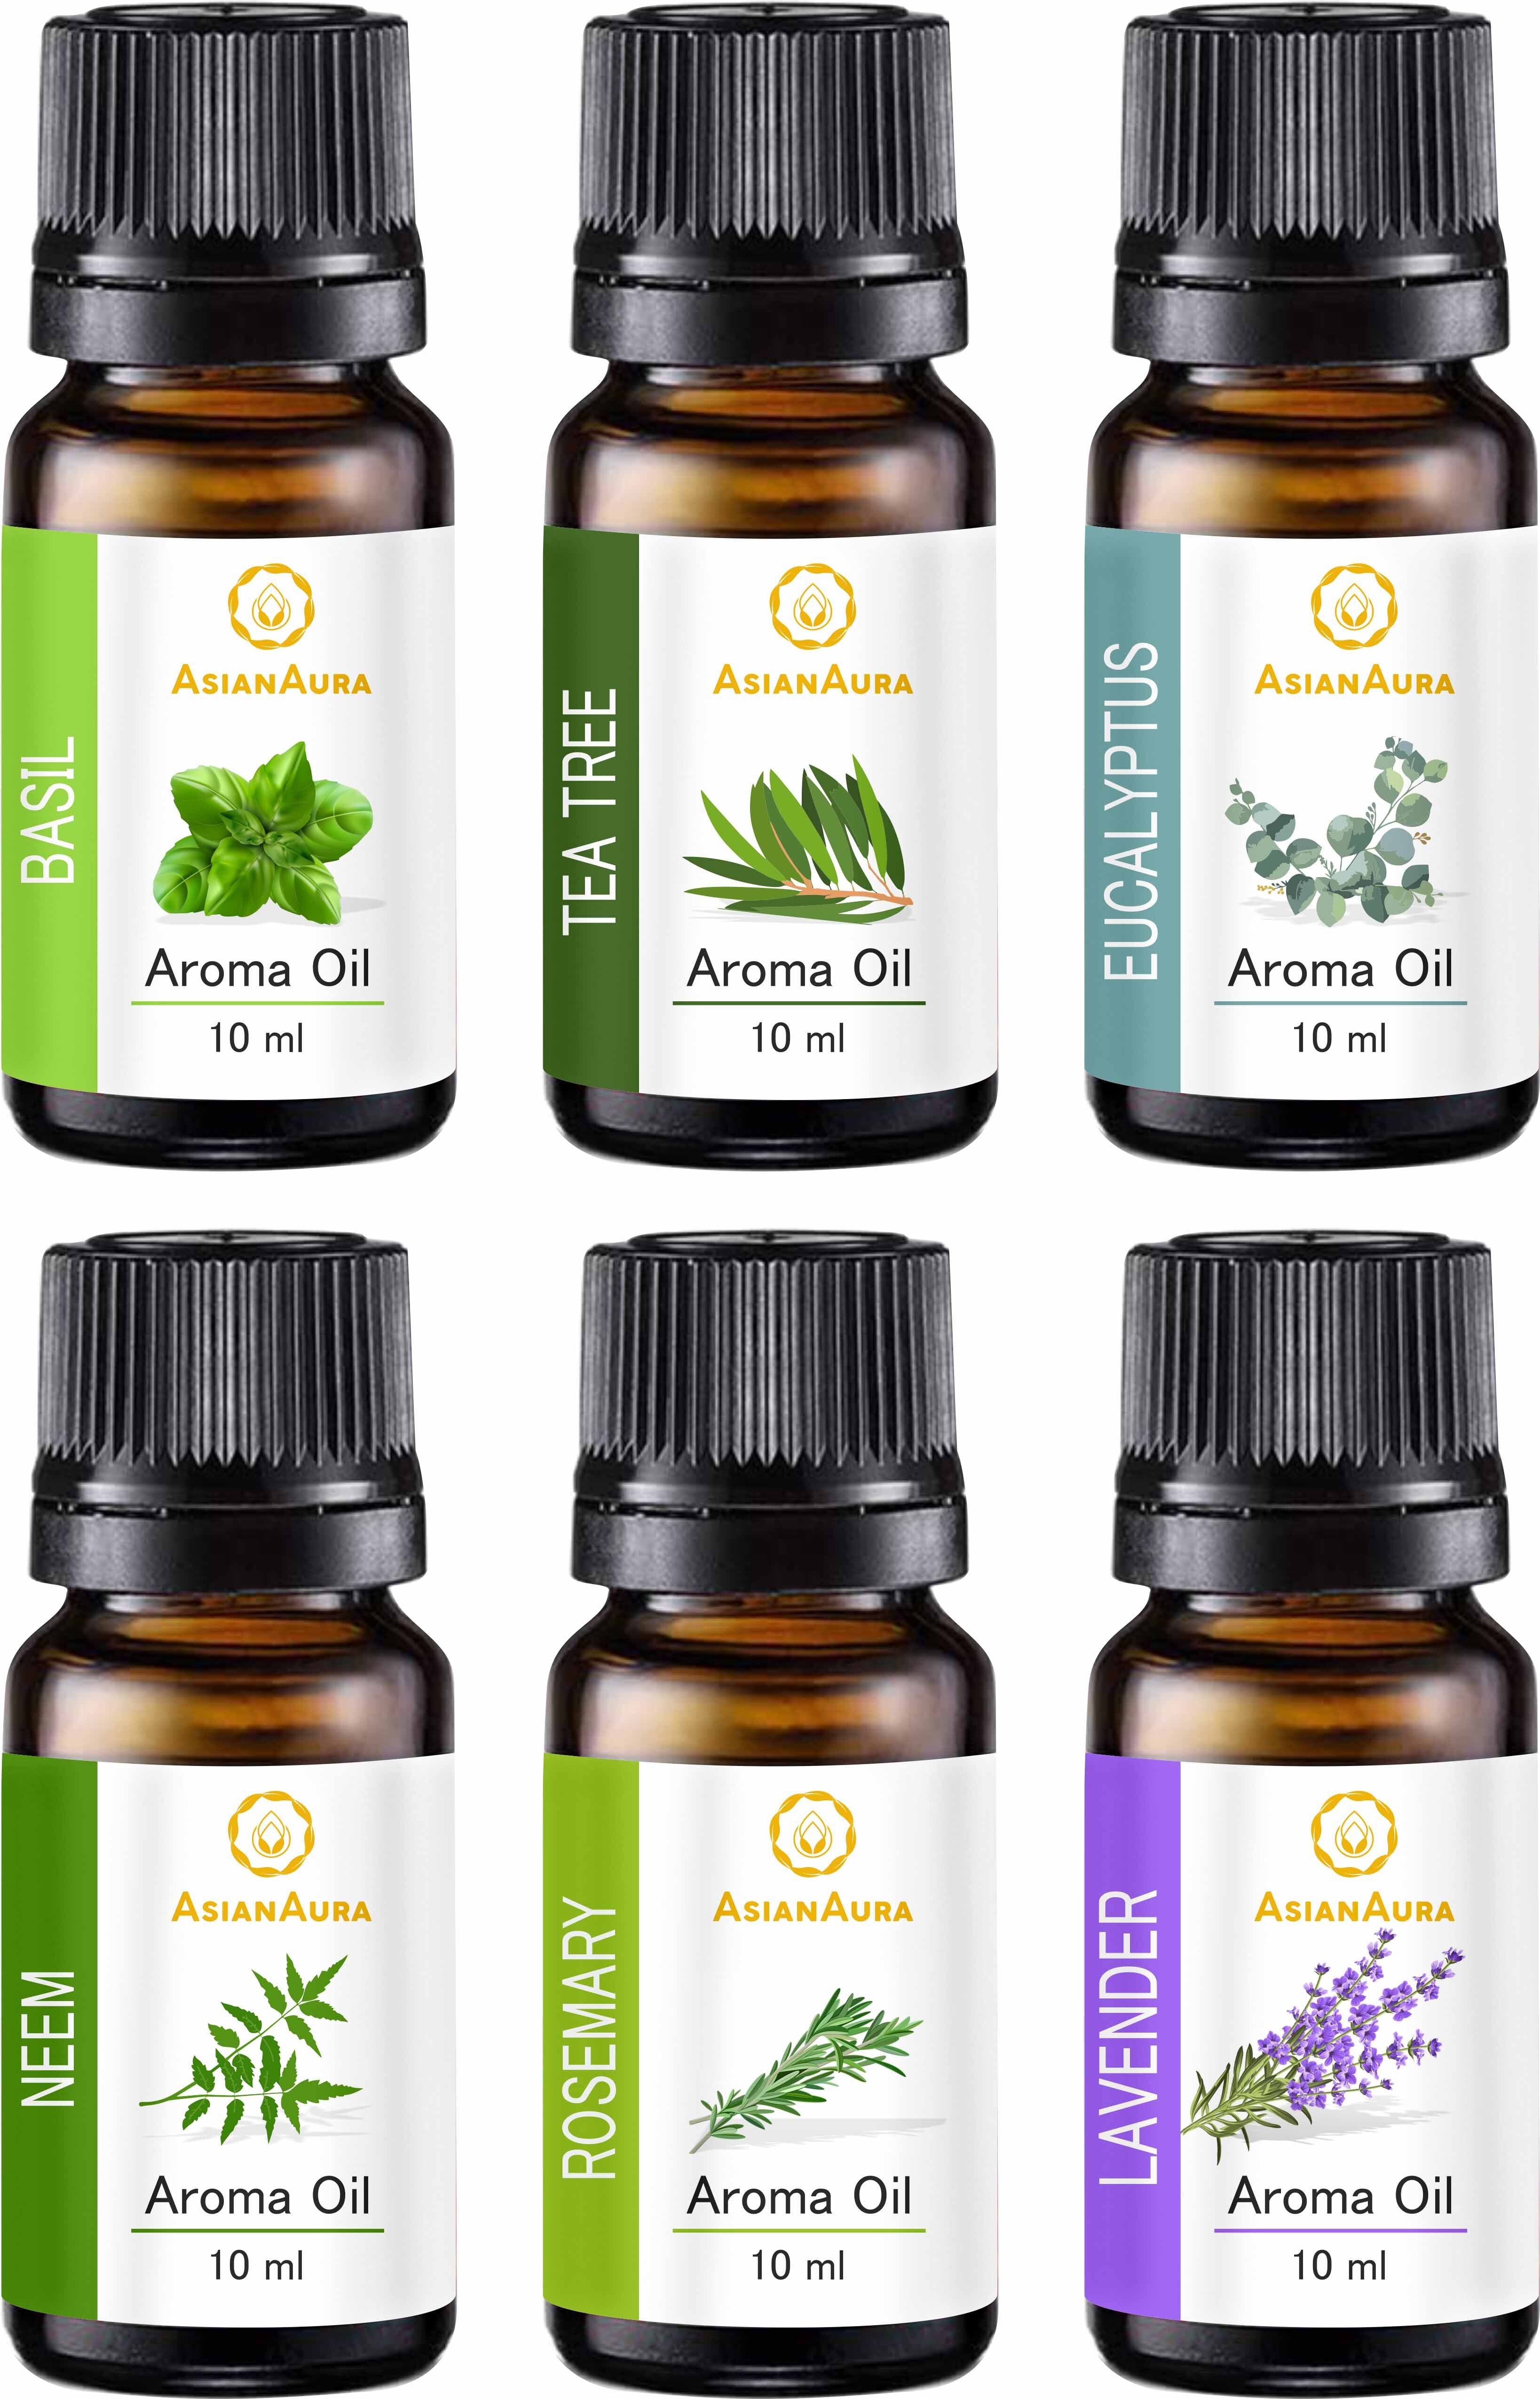 Asian Aura anti bacterial pack 10ml Aroma oil Set of 6